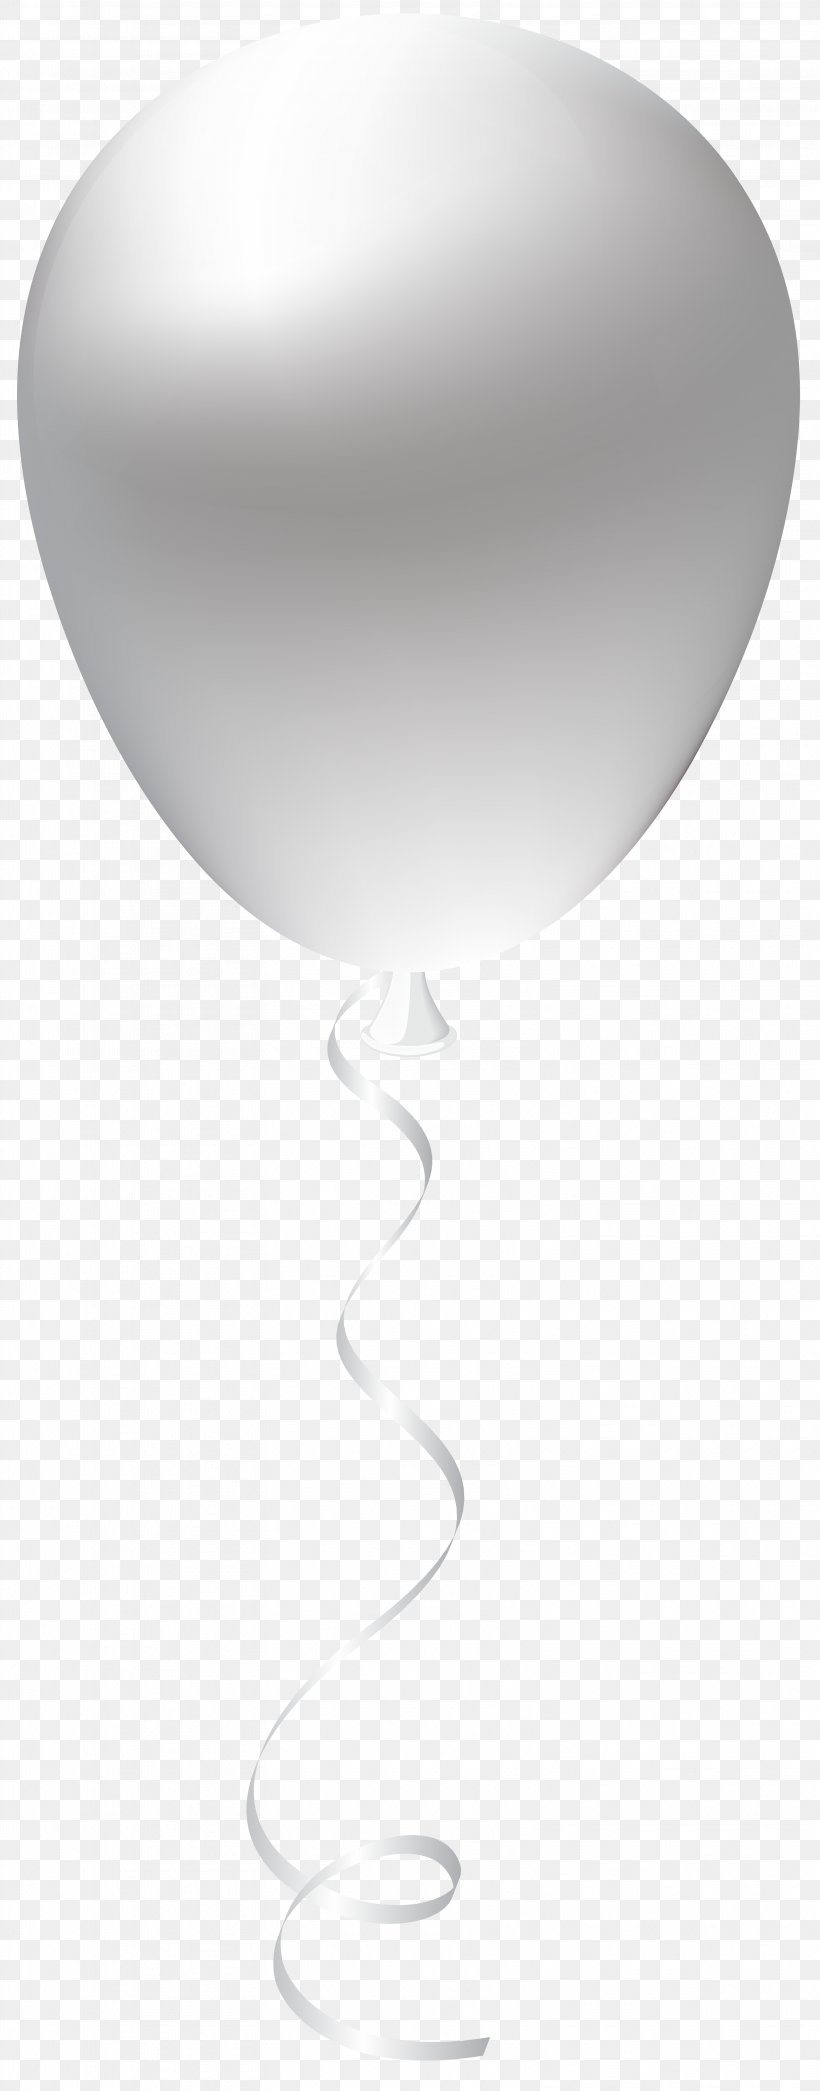 White Balloons * Image Clip Art, PNG, 3136x8000px, Balloon.